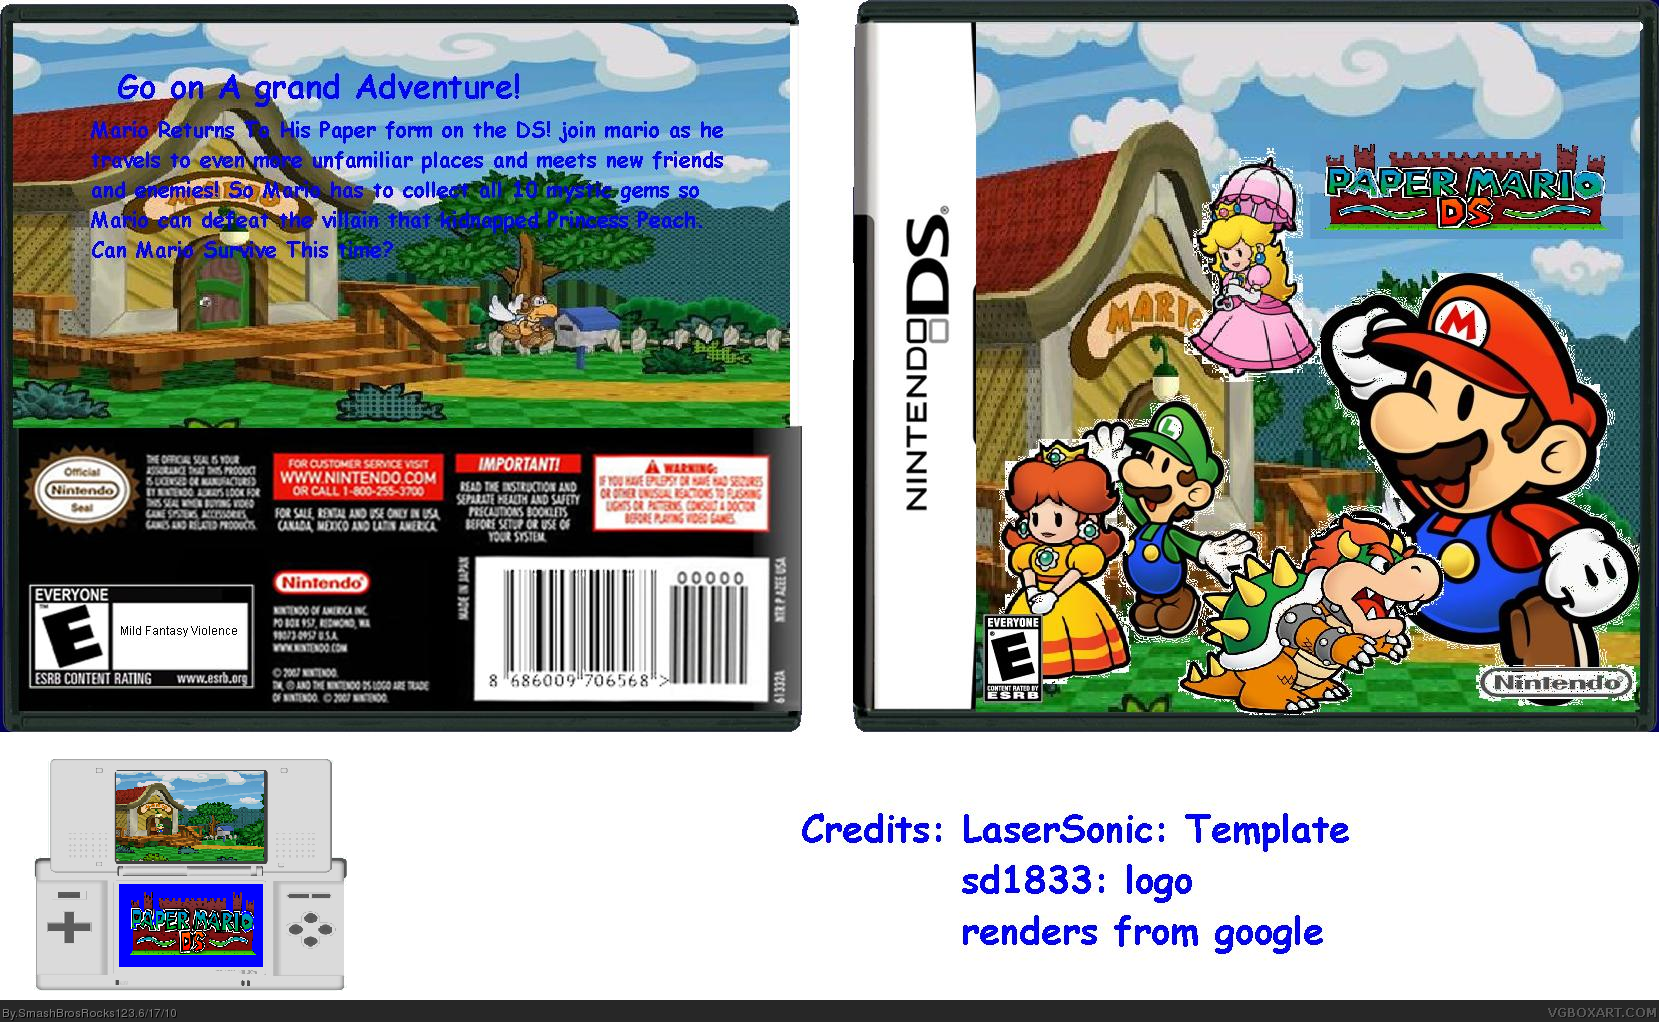 Paper Mario DS box cover